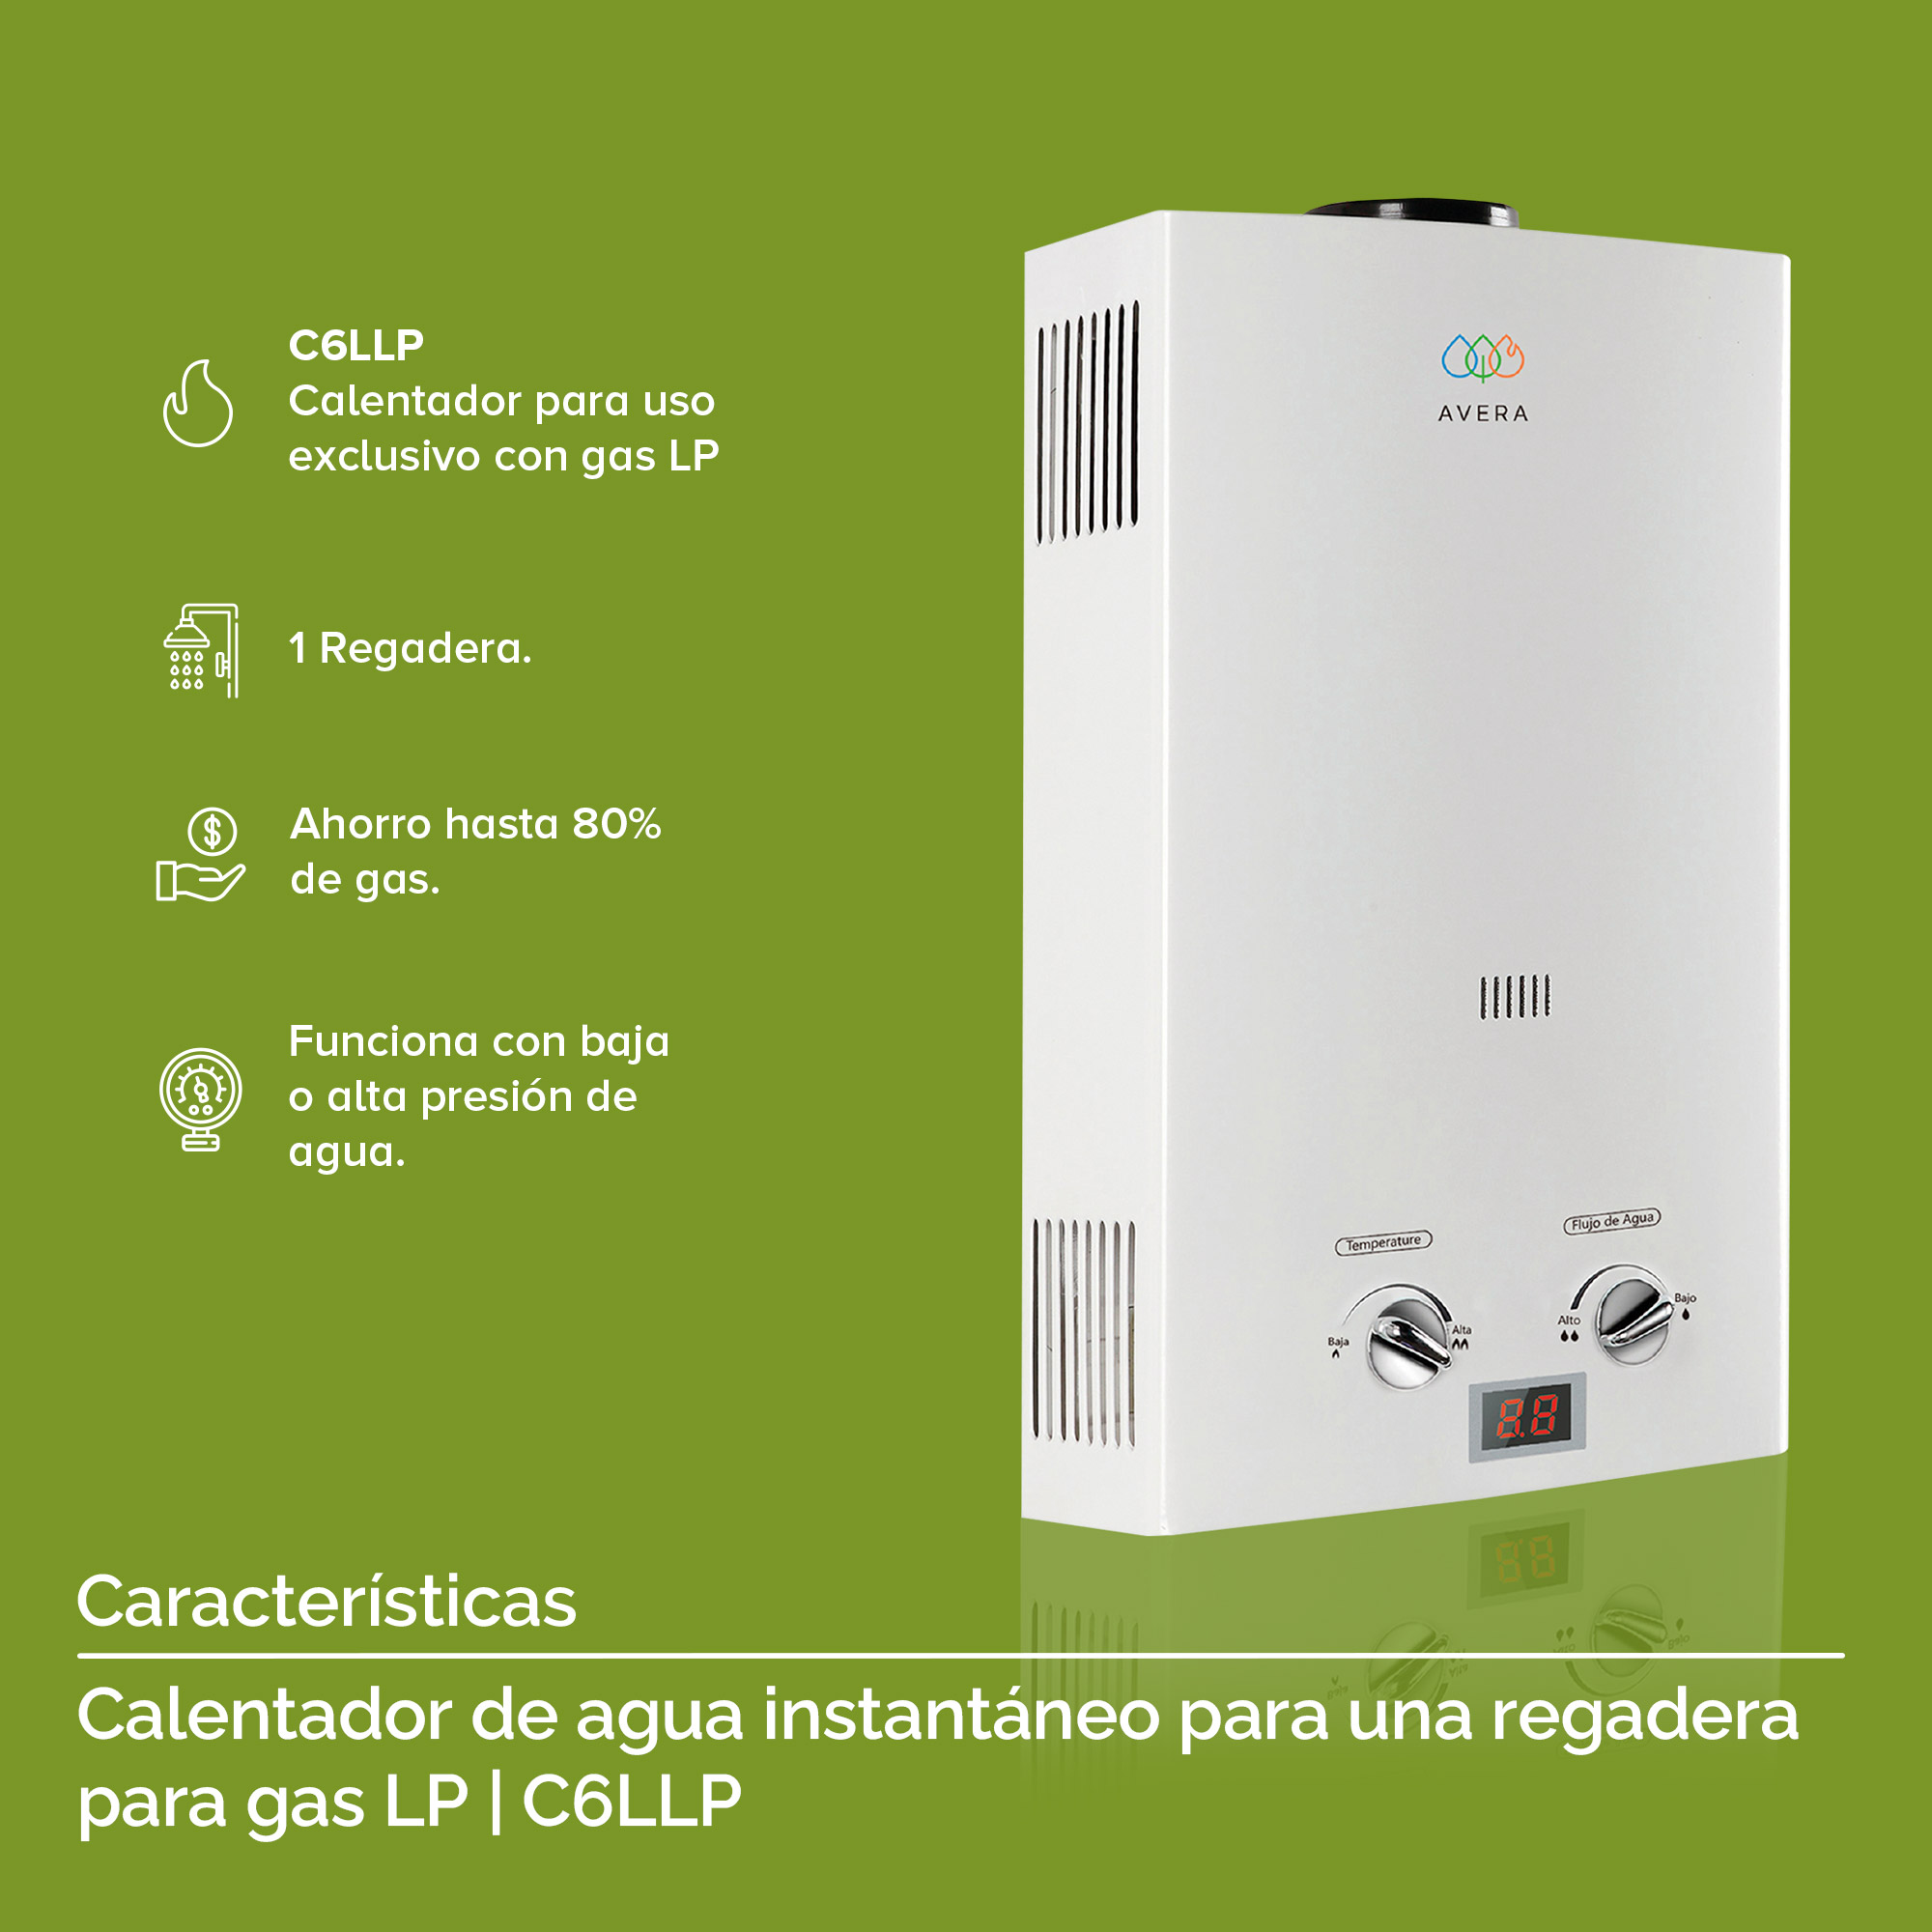 AVERA Calentador Boiler de Agua Instantáneo para Gas LP 1 servicio C6L